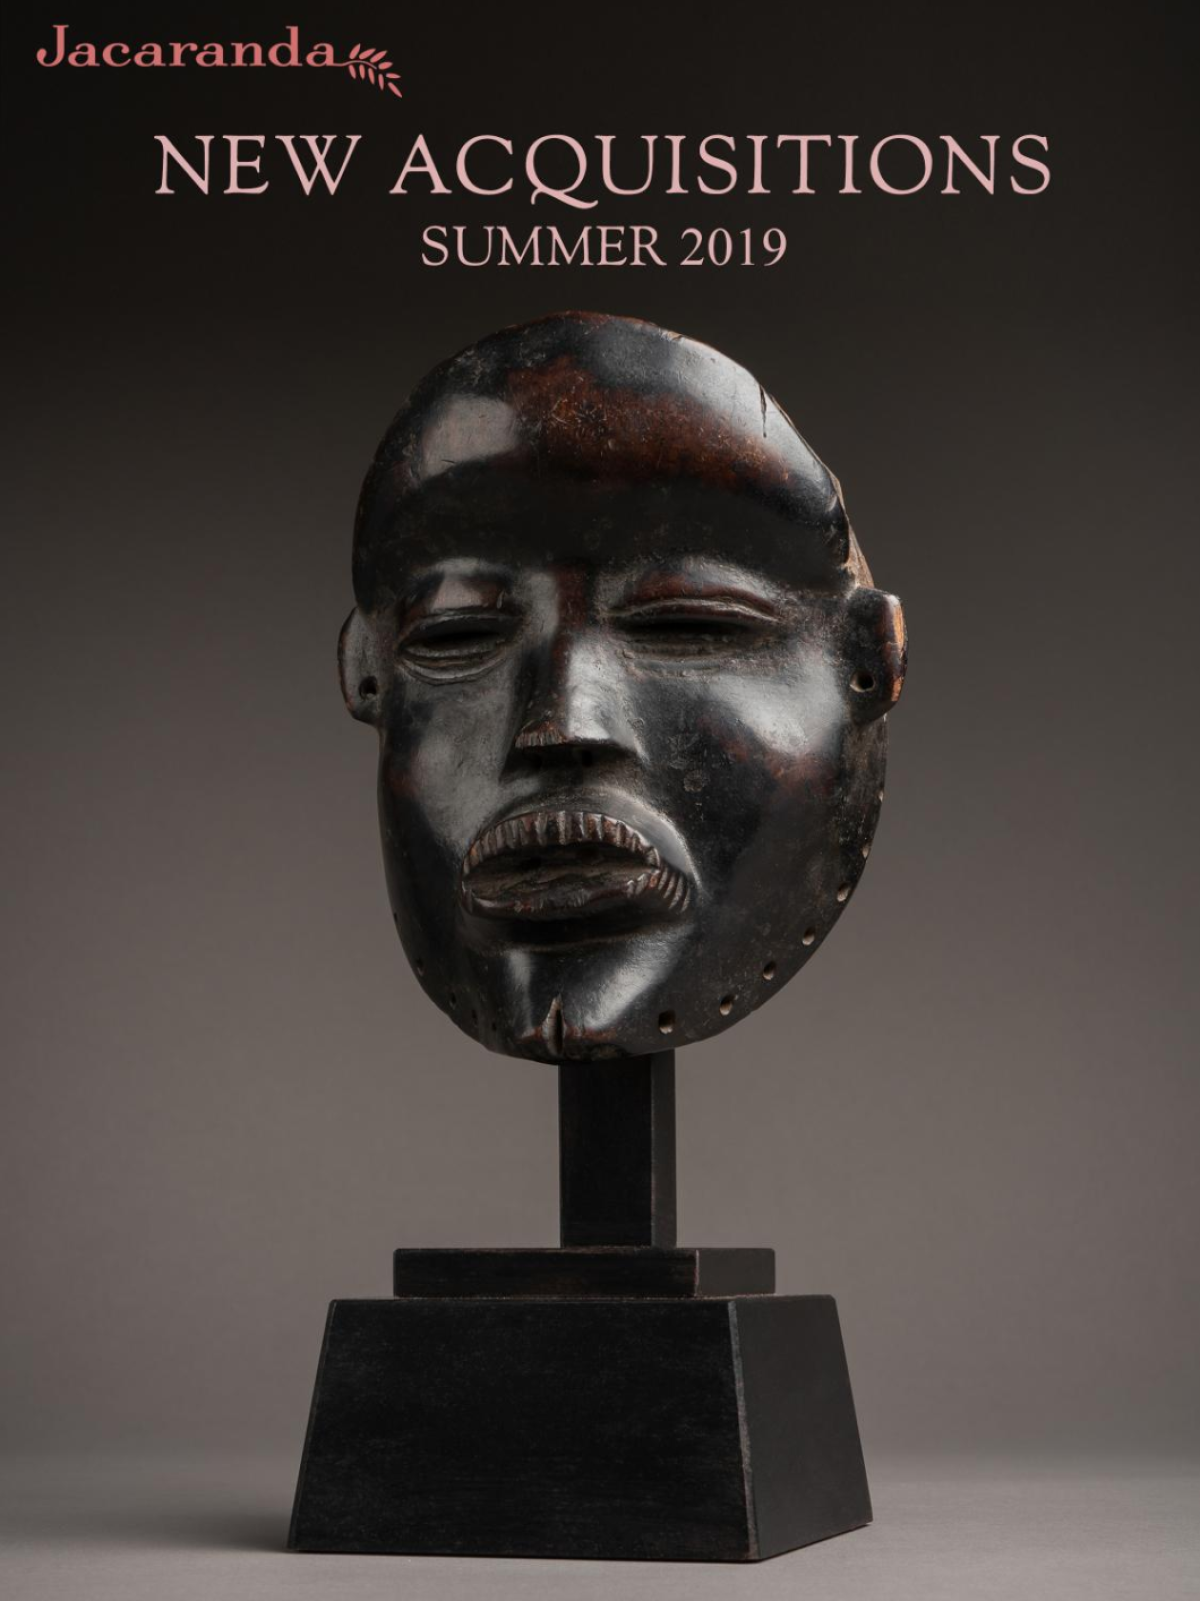 The cover of Jacaranda's 2019 catalog.